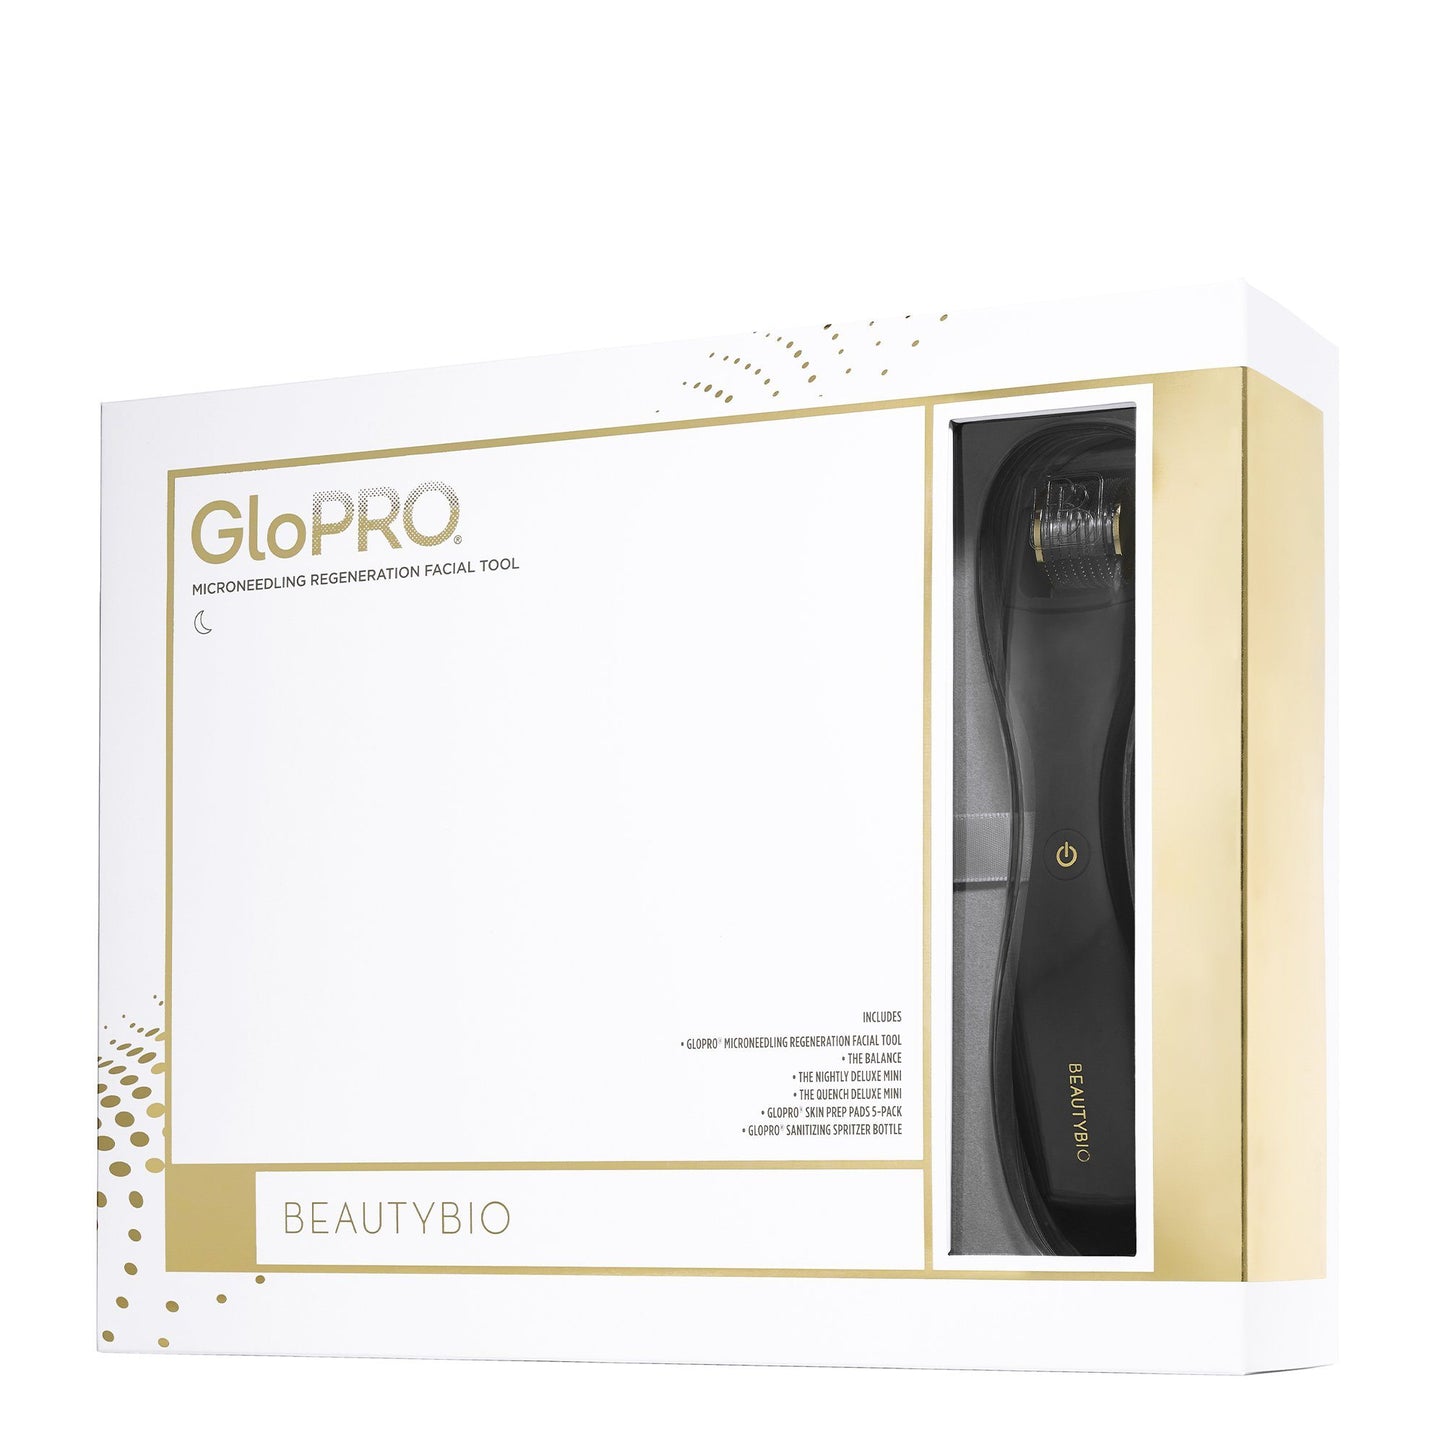 Limited Edition Black GloPRO® GloPRO BeautyBio 